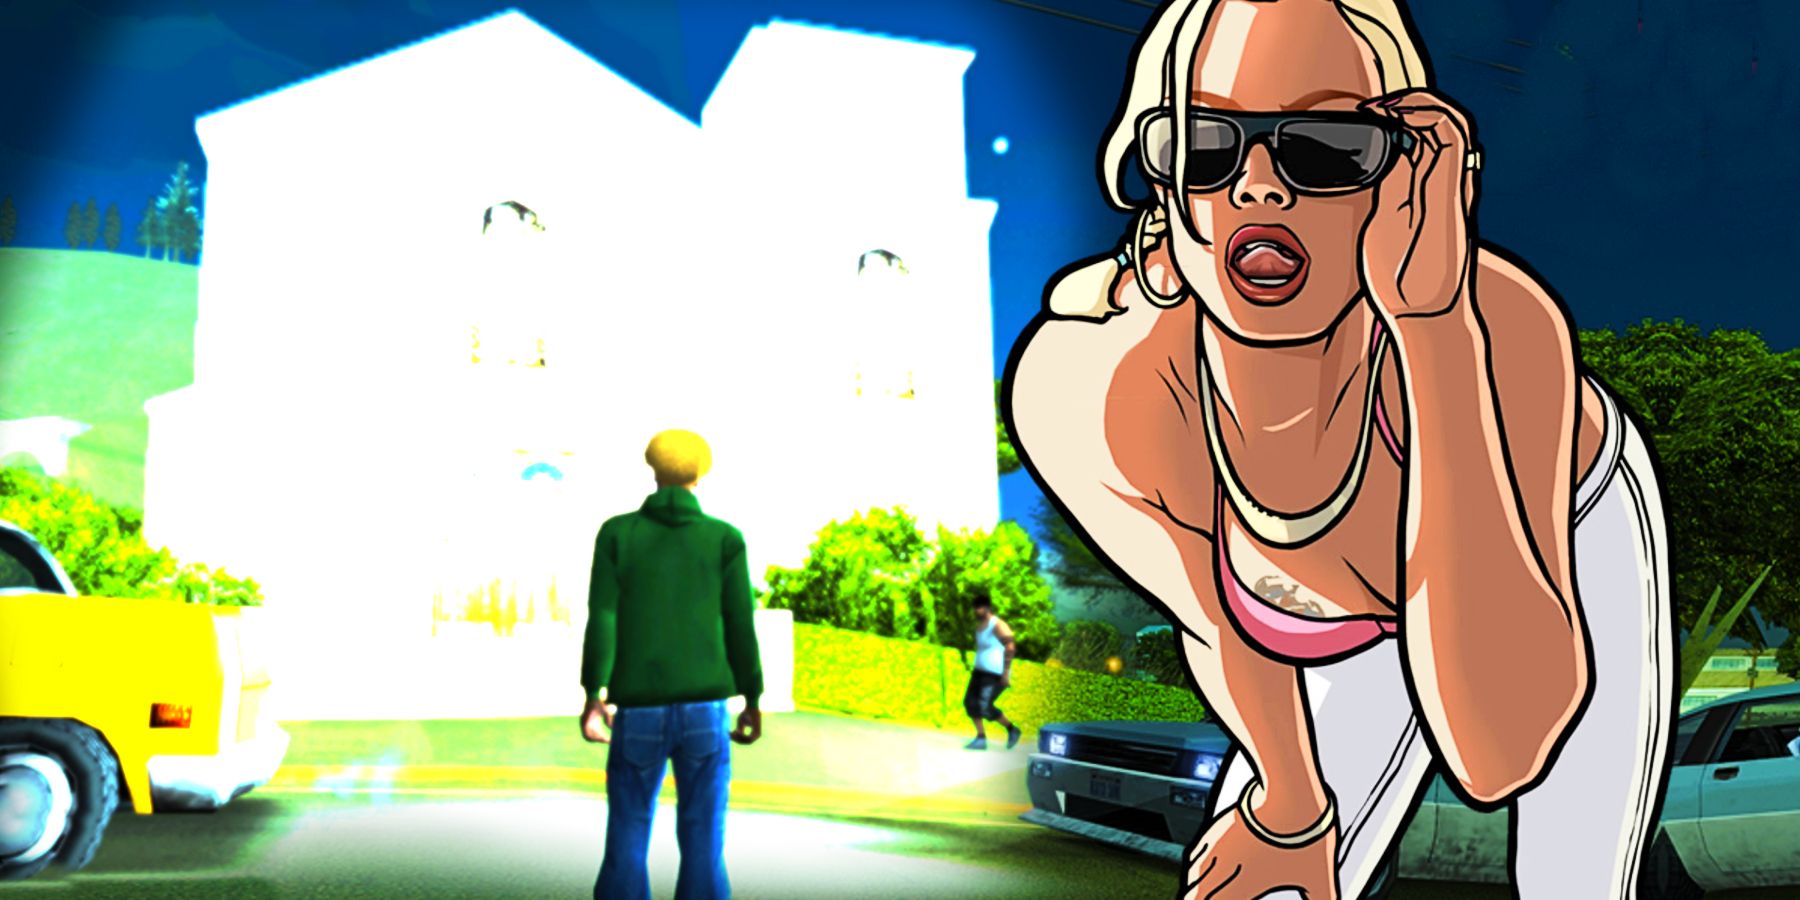 Grand Theft Auto: San Andreas Glitch Makes Church Excessively Bright